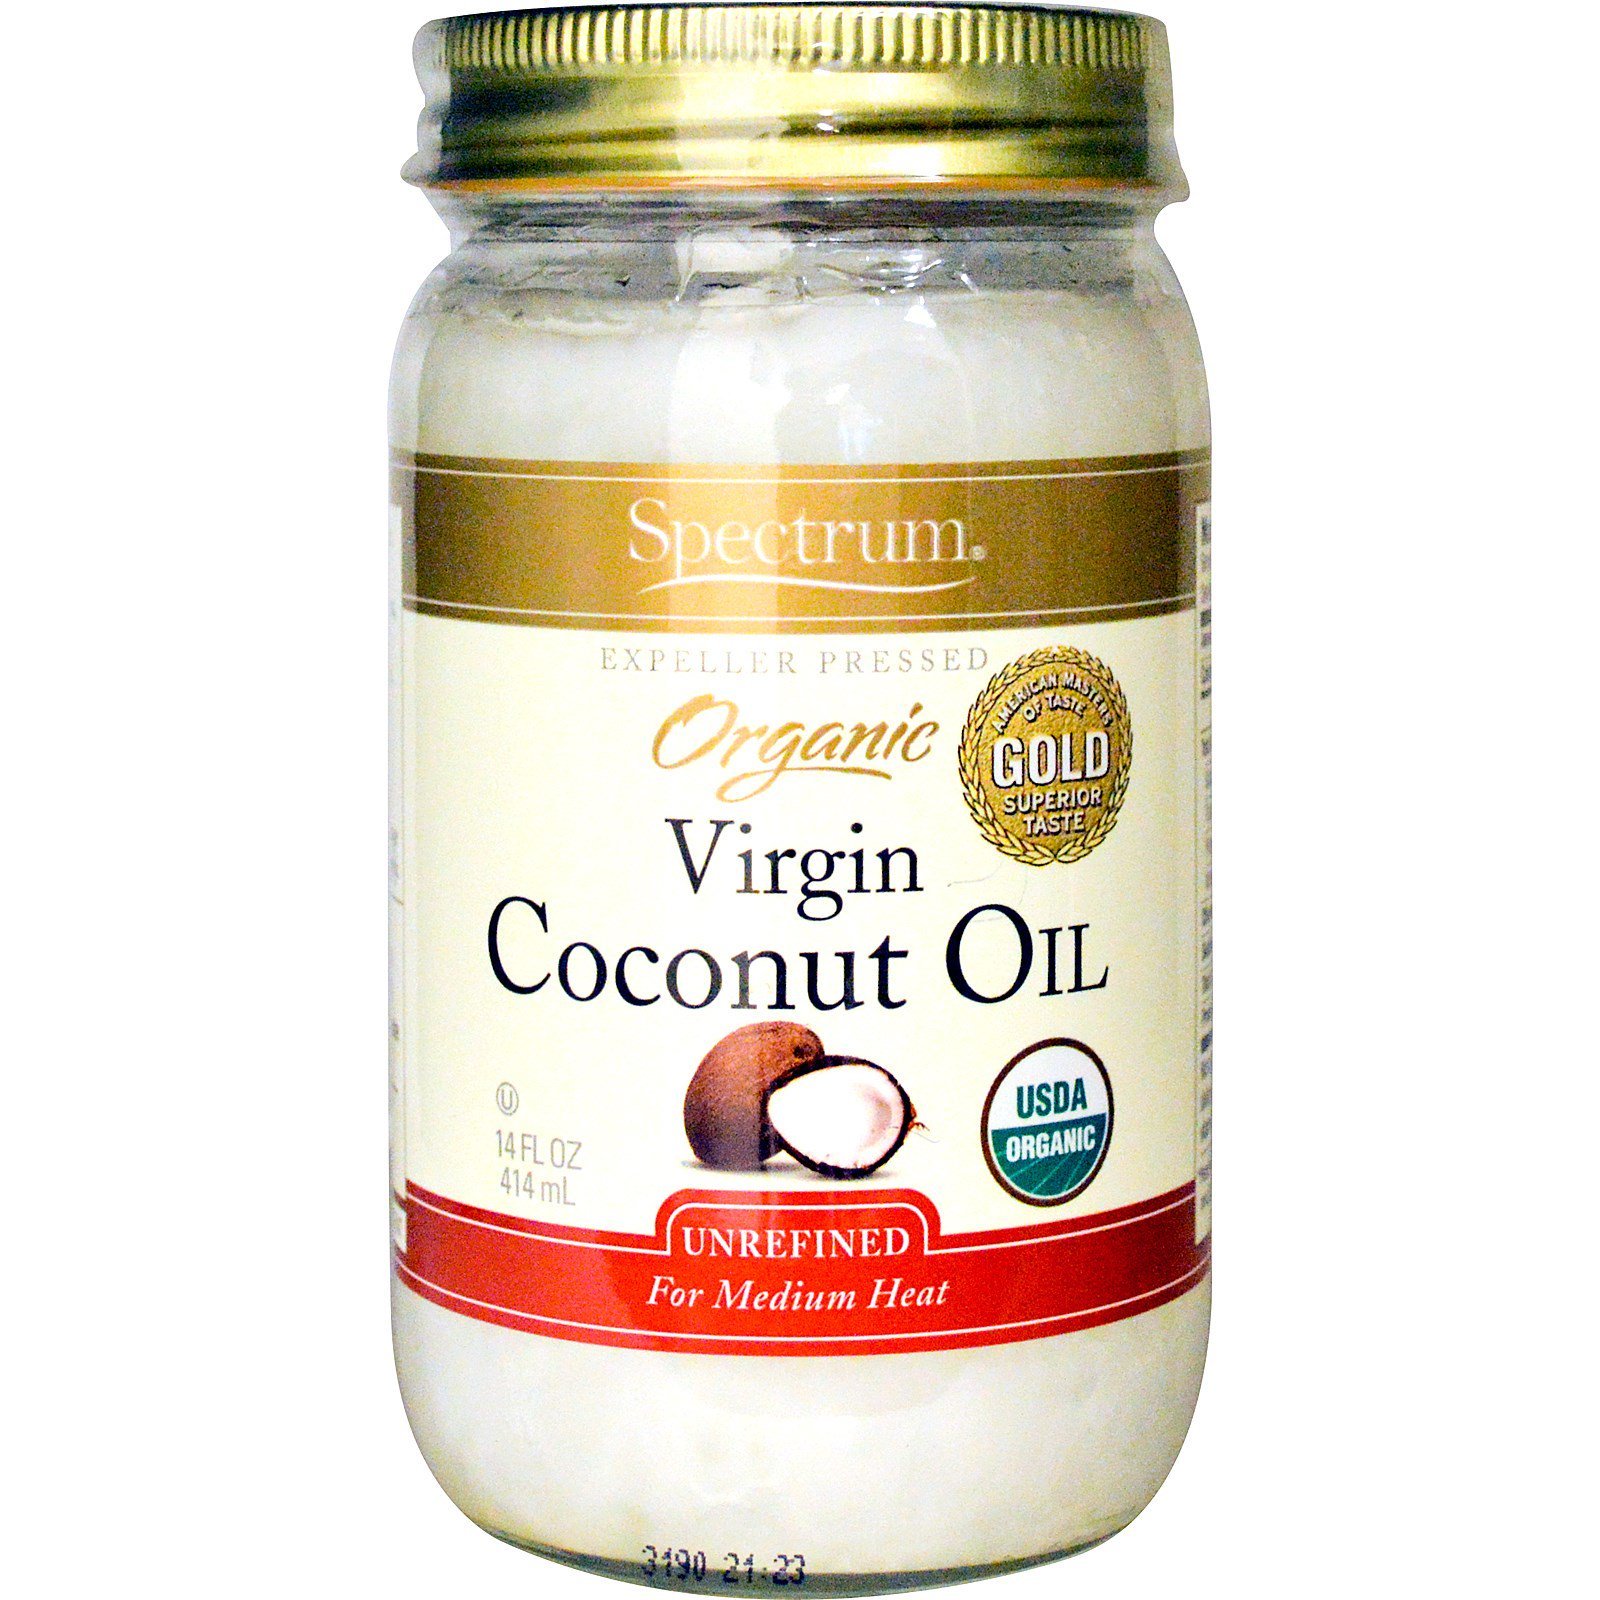 organic virgin coconut oil Spectrum